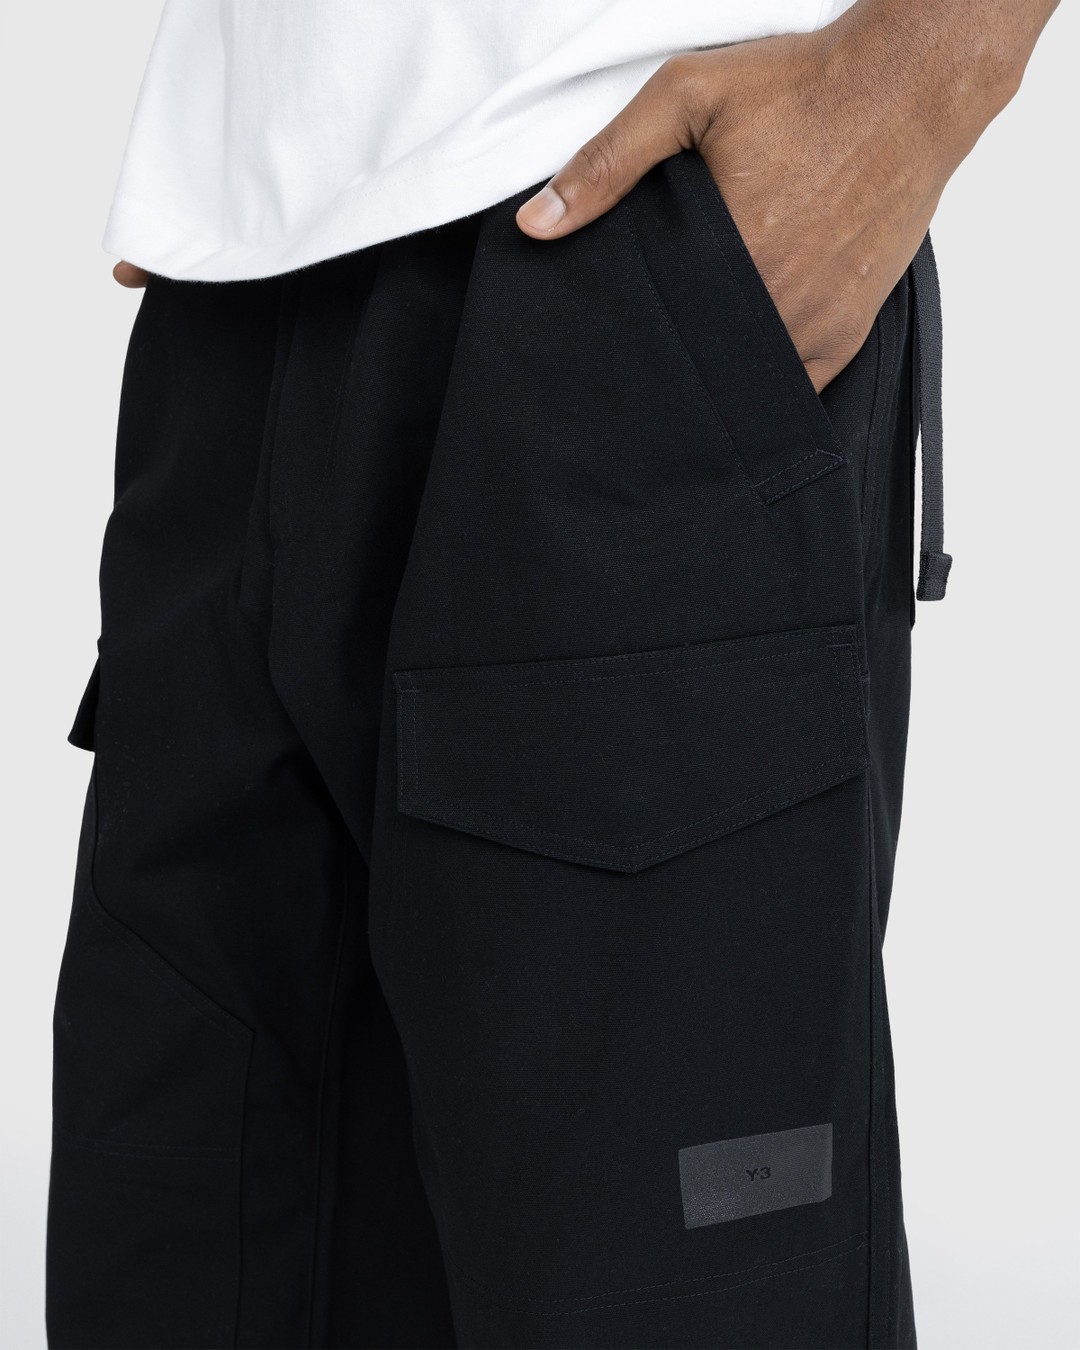 Y-3 – GFX Workwear Pants Black - Pants - Black - Image 4